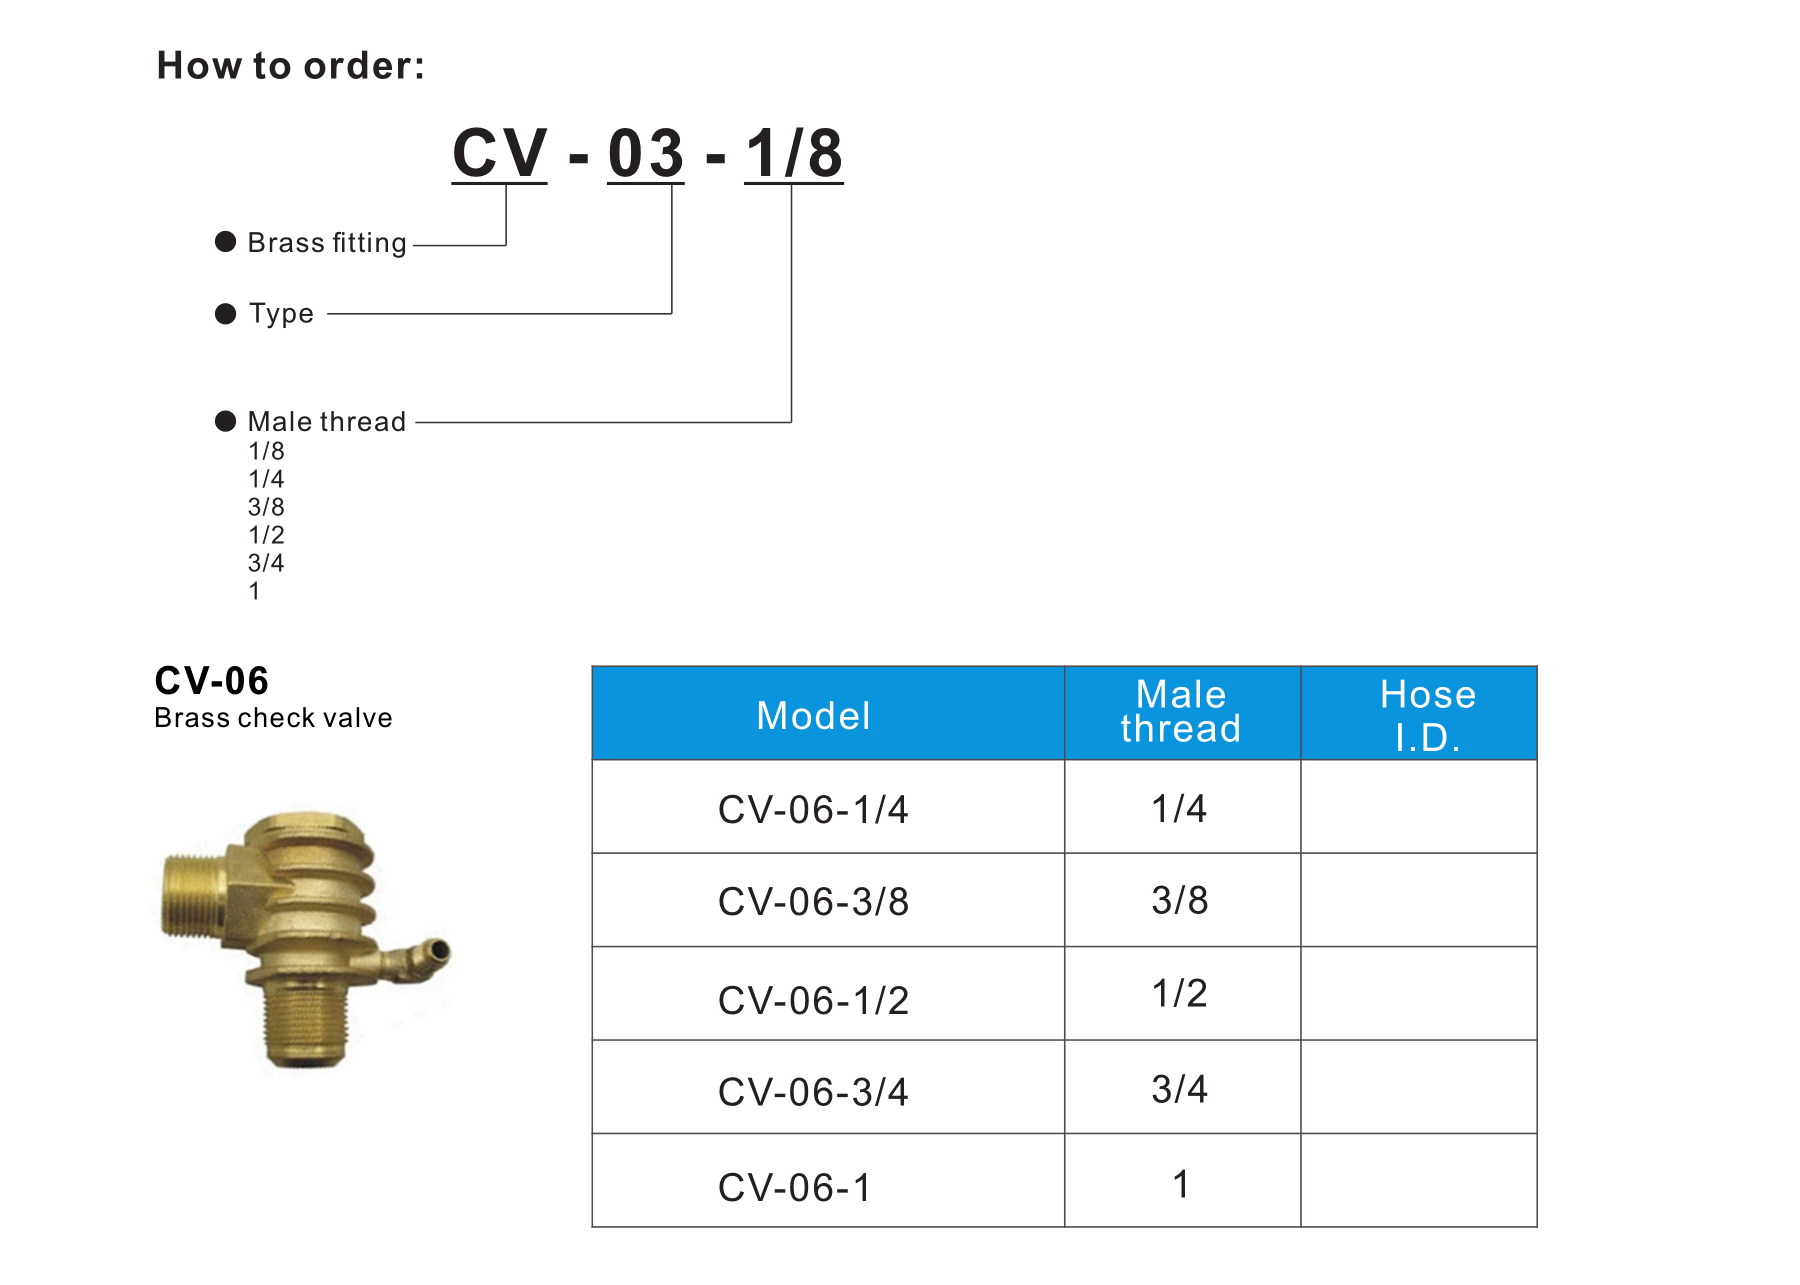 CV-06 Brass check valve